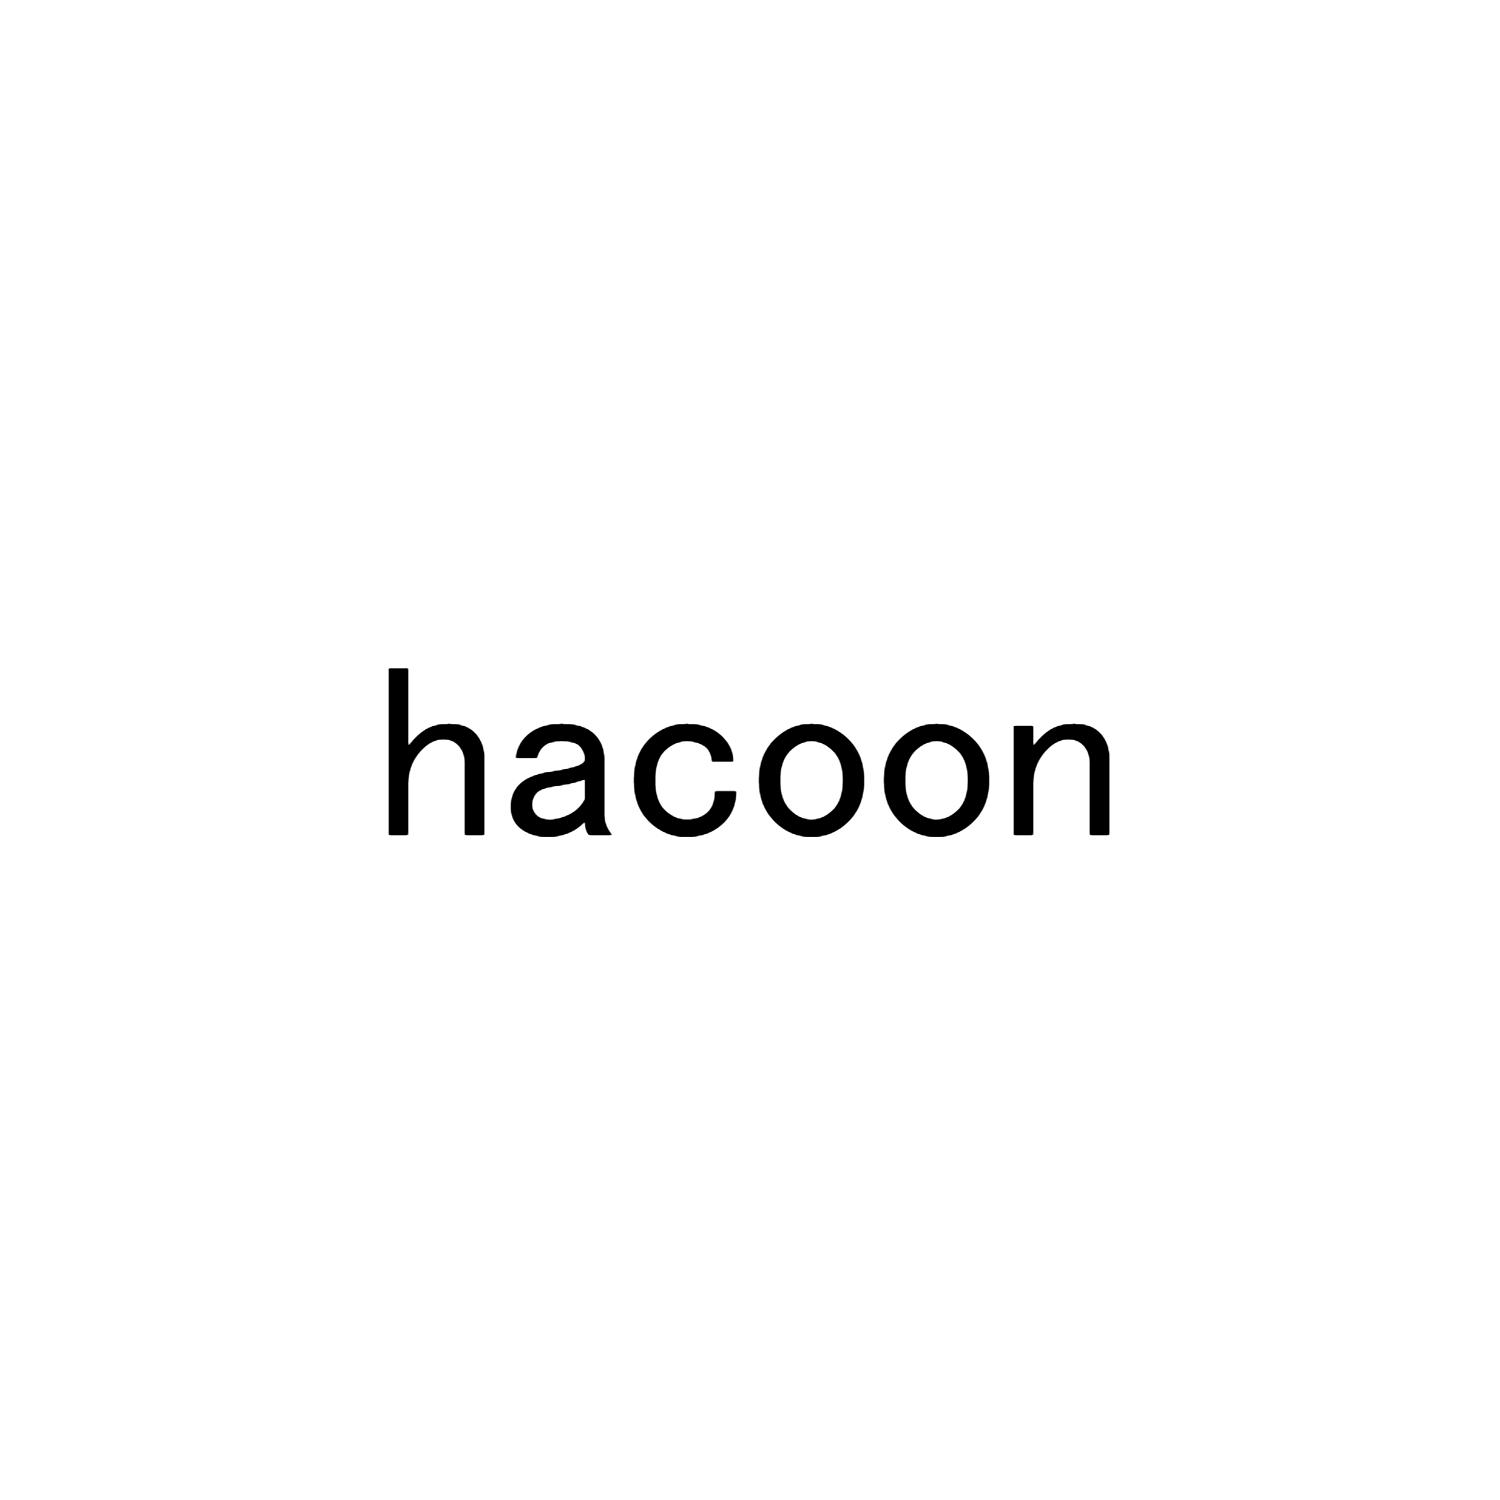 HACOON